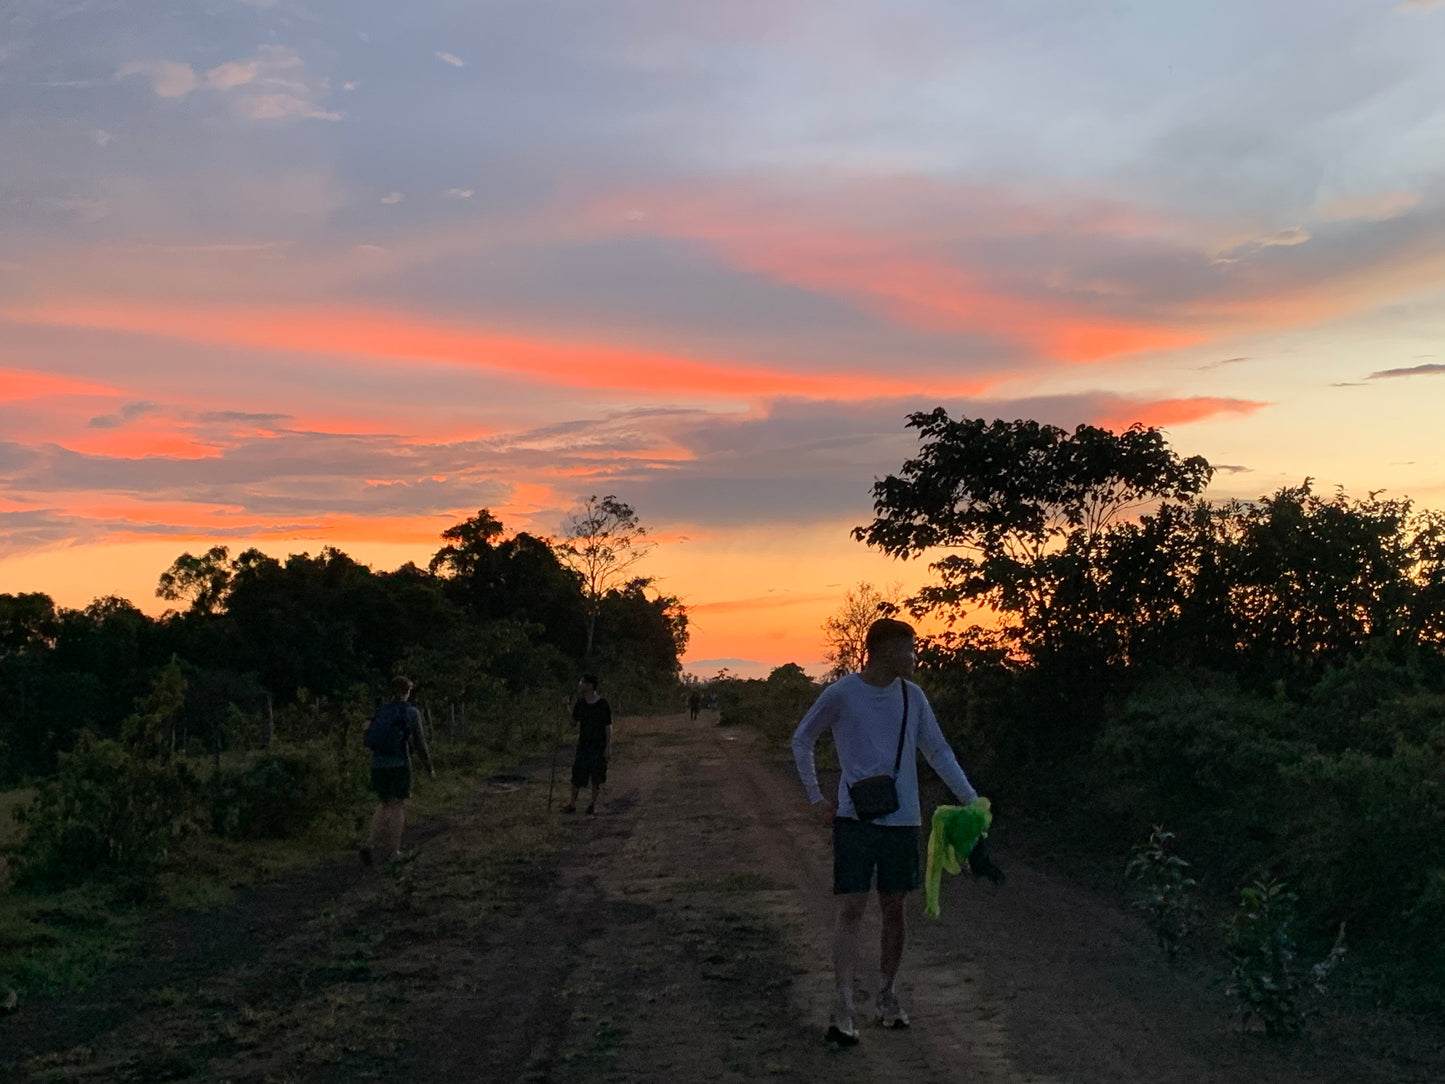 A3C (3 DAYS): Mondulkiri, Endless Green Meadows in Cambodia